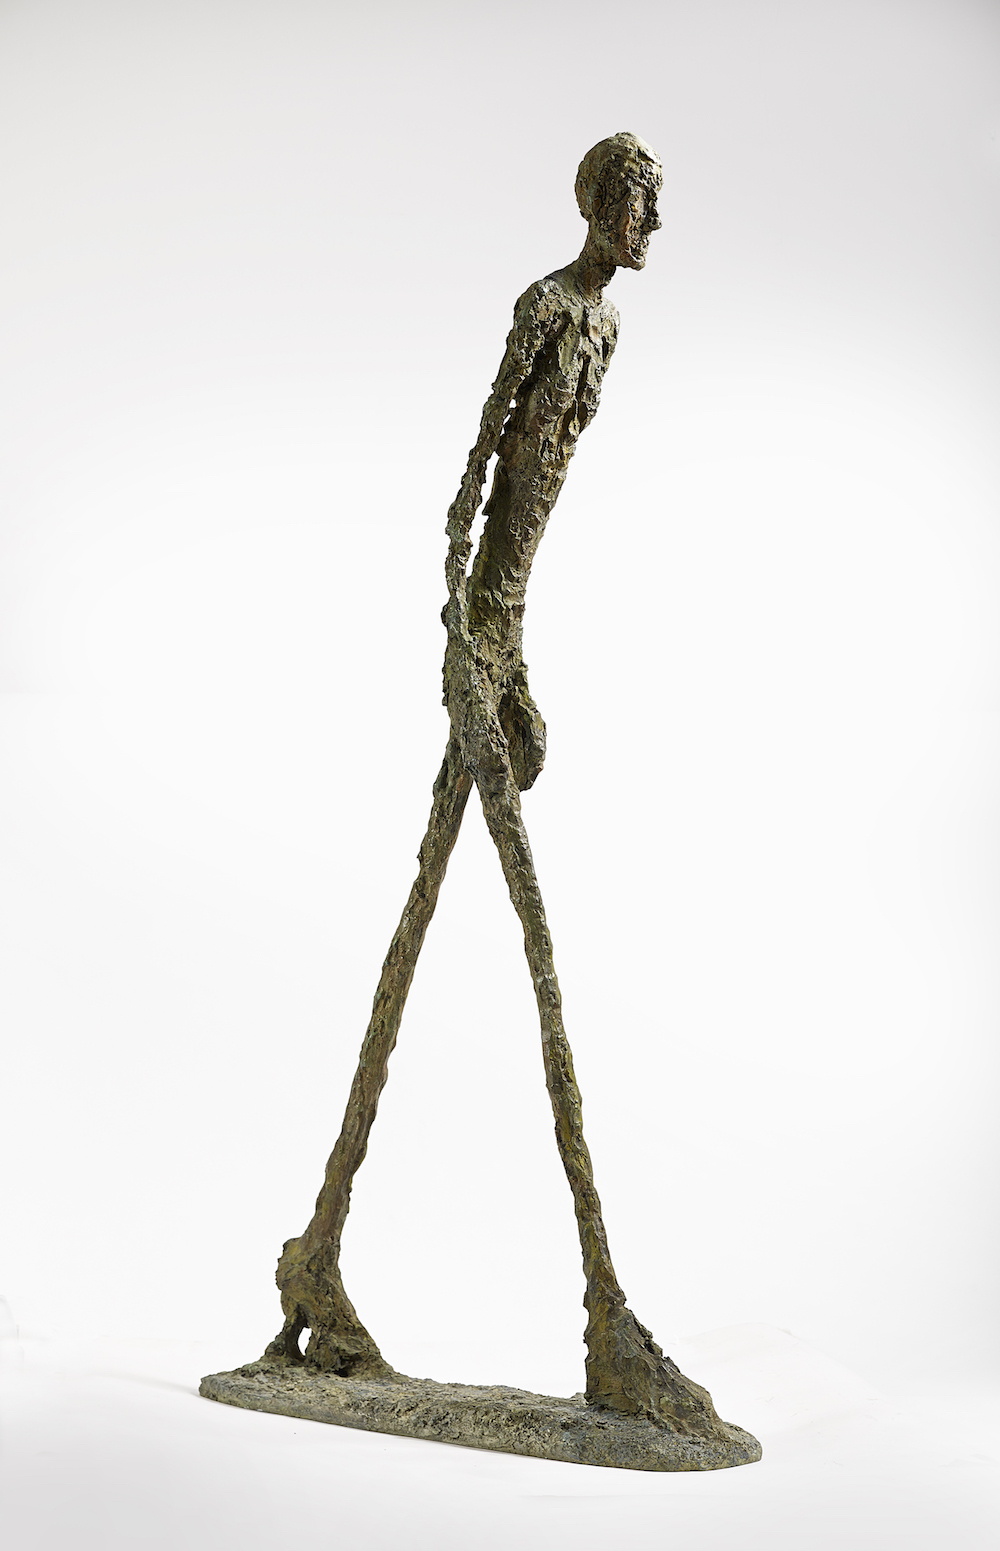 Alberto Giacometti, "L’Homme qui marche I," 1960, bronze, 183 x 26 x 95,5 cm, photo by Claude Germain, courtesy to Collection Fondation Maeght, Saint-Paul-de-Vence.